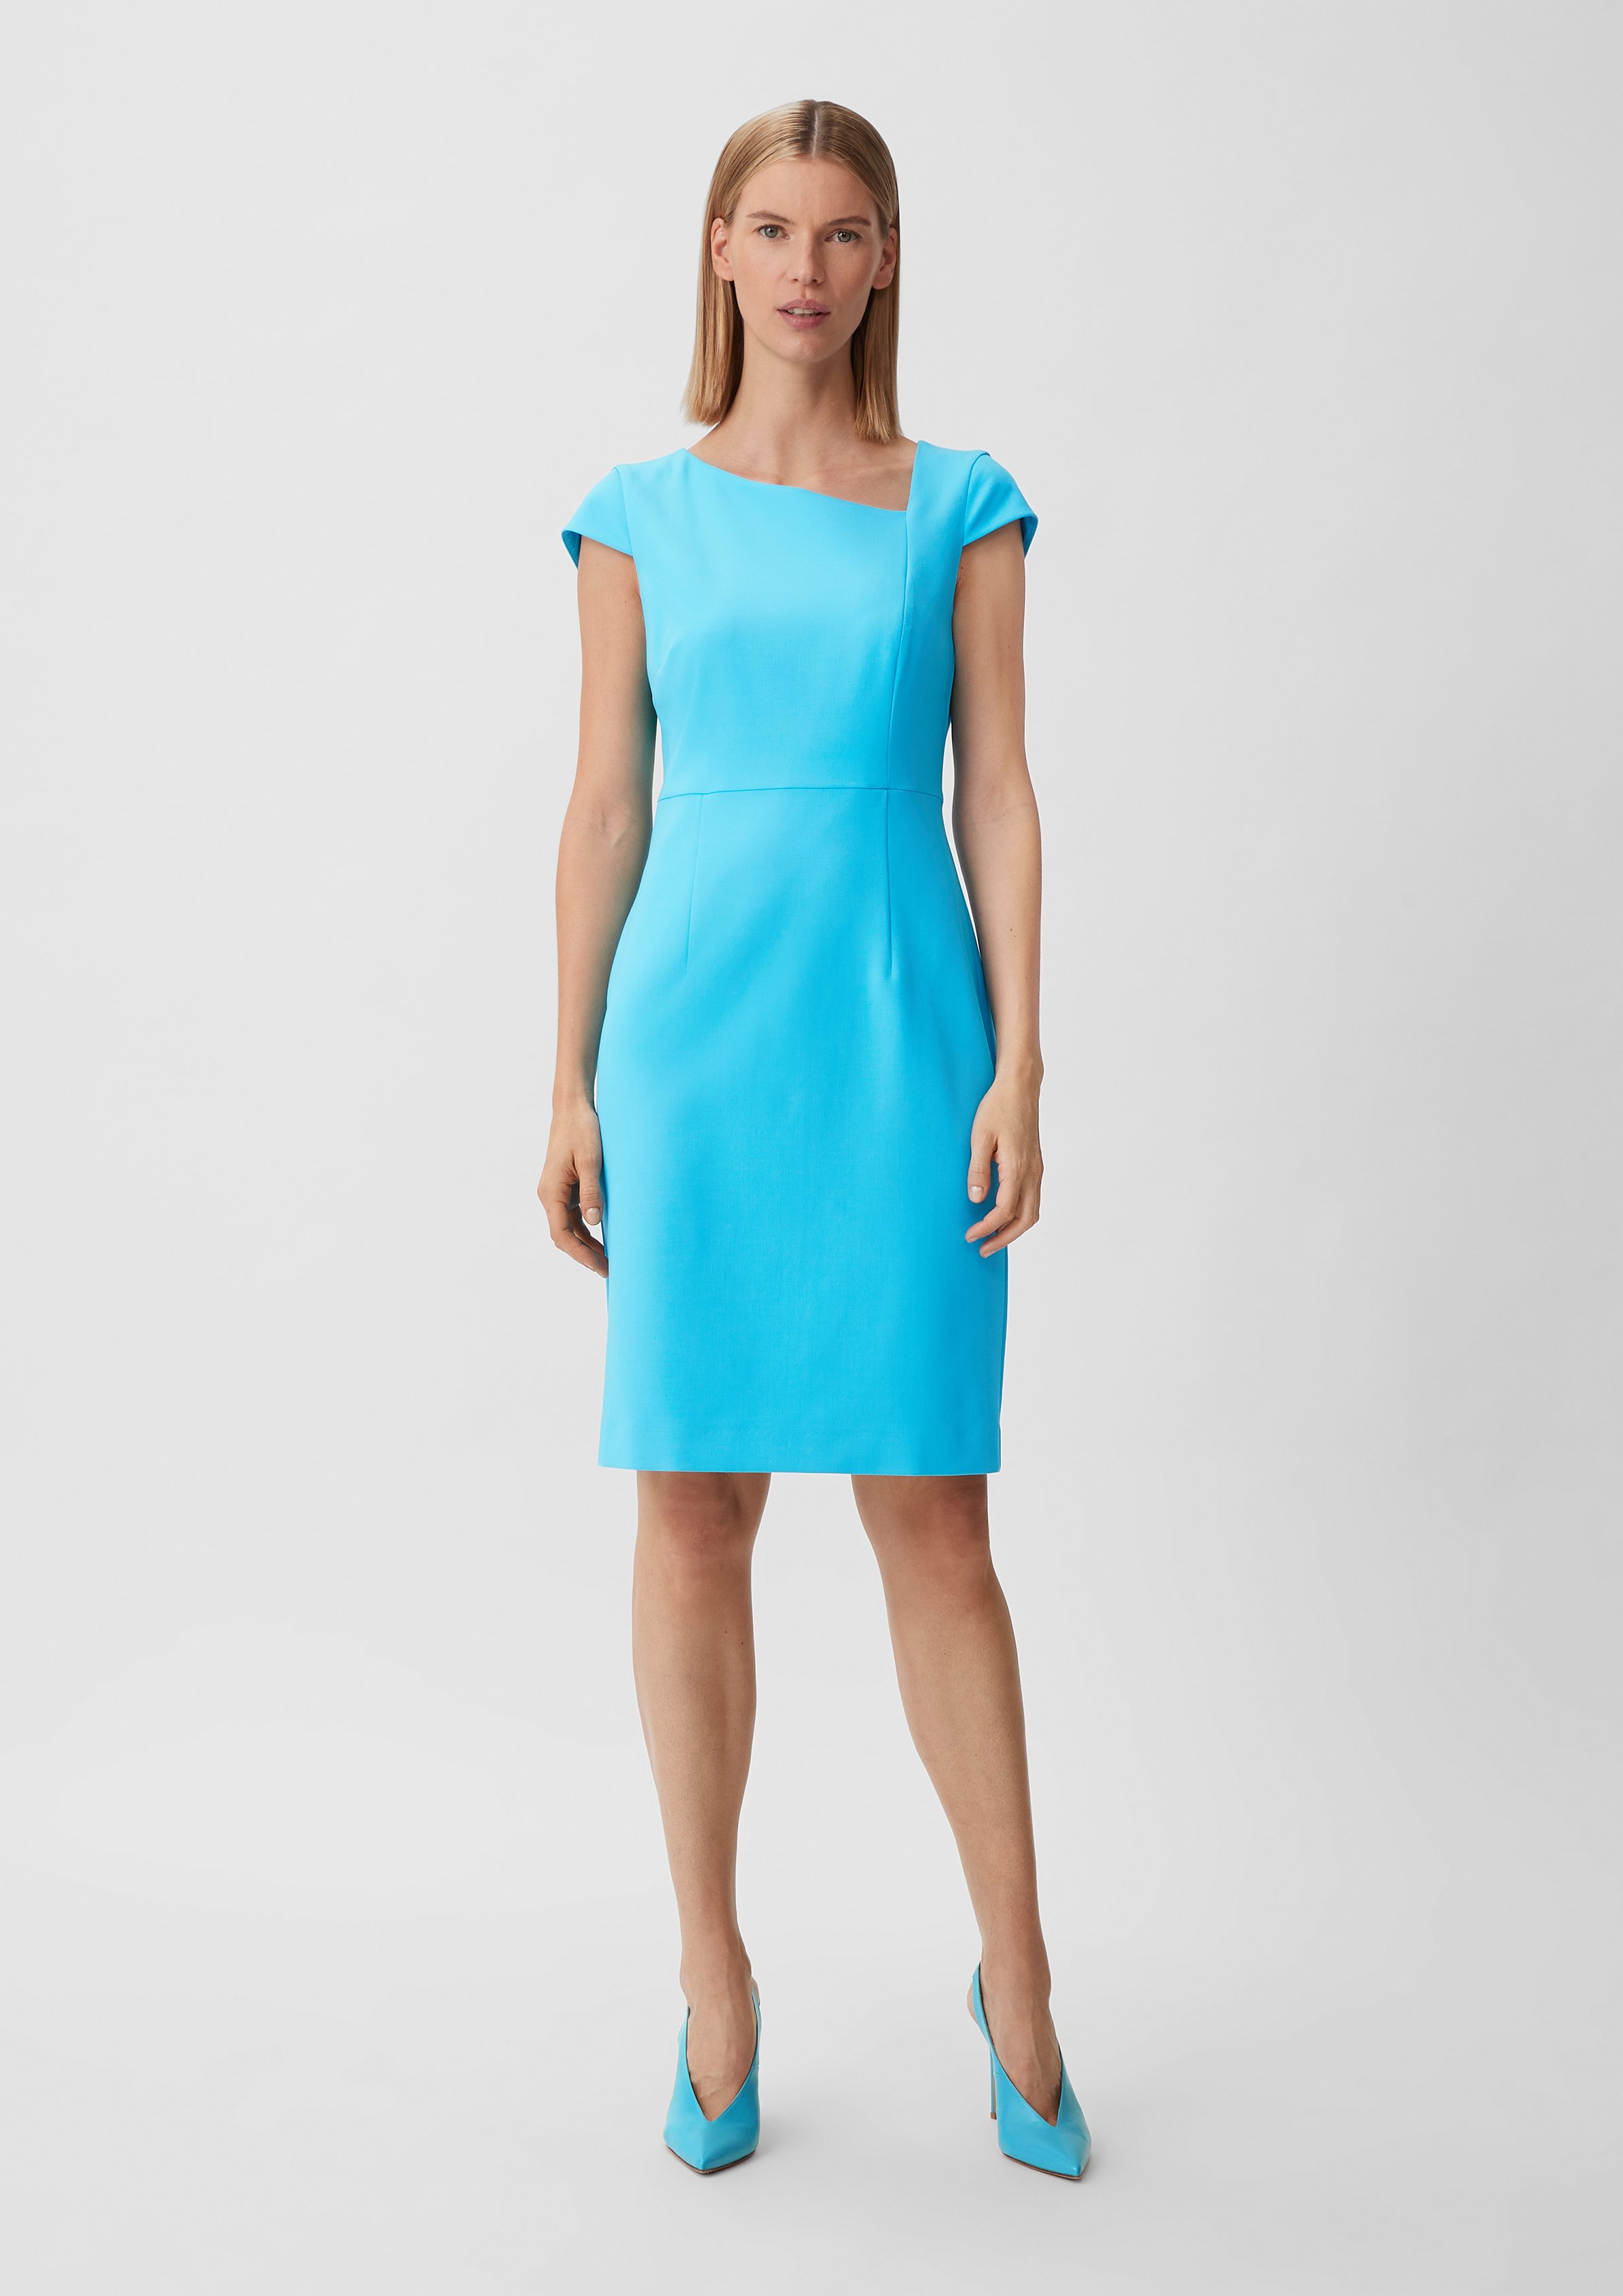 COMMANDER Kleid aus türkisblau Minikleid Ziernaht Comma Twill